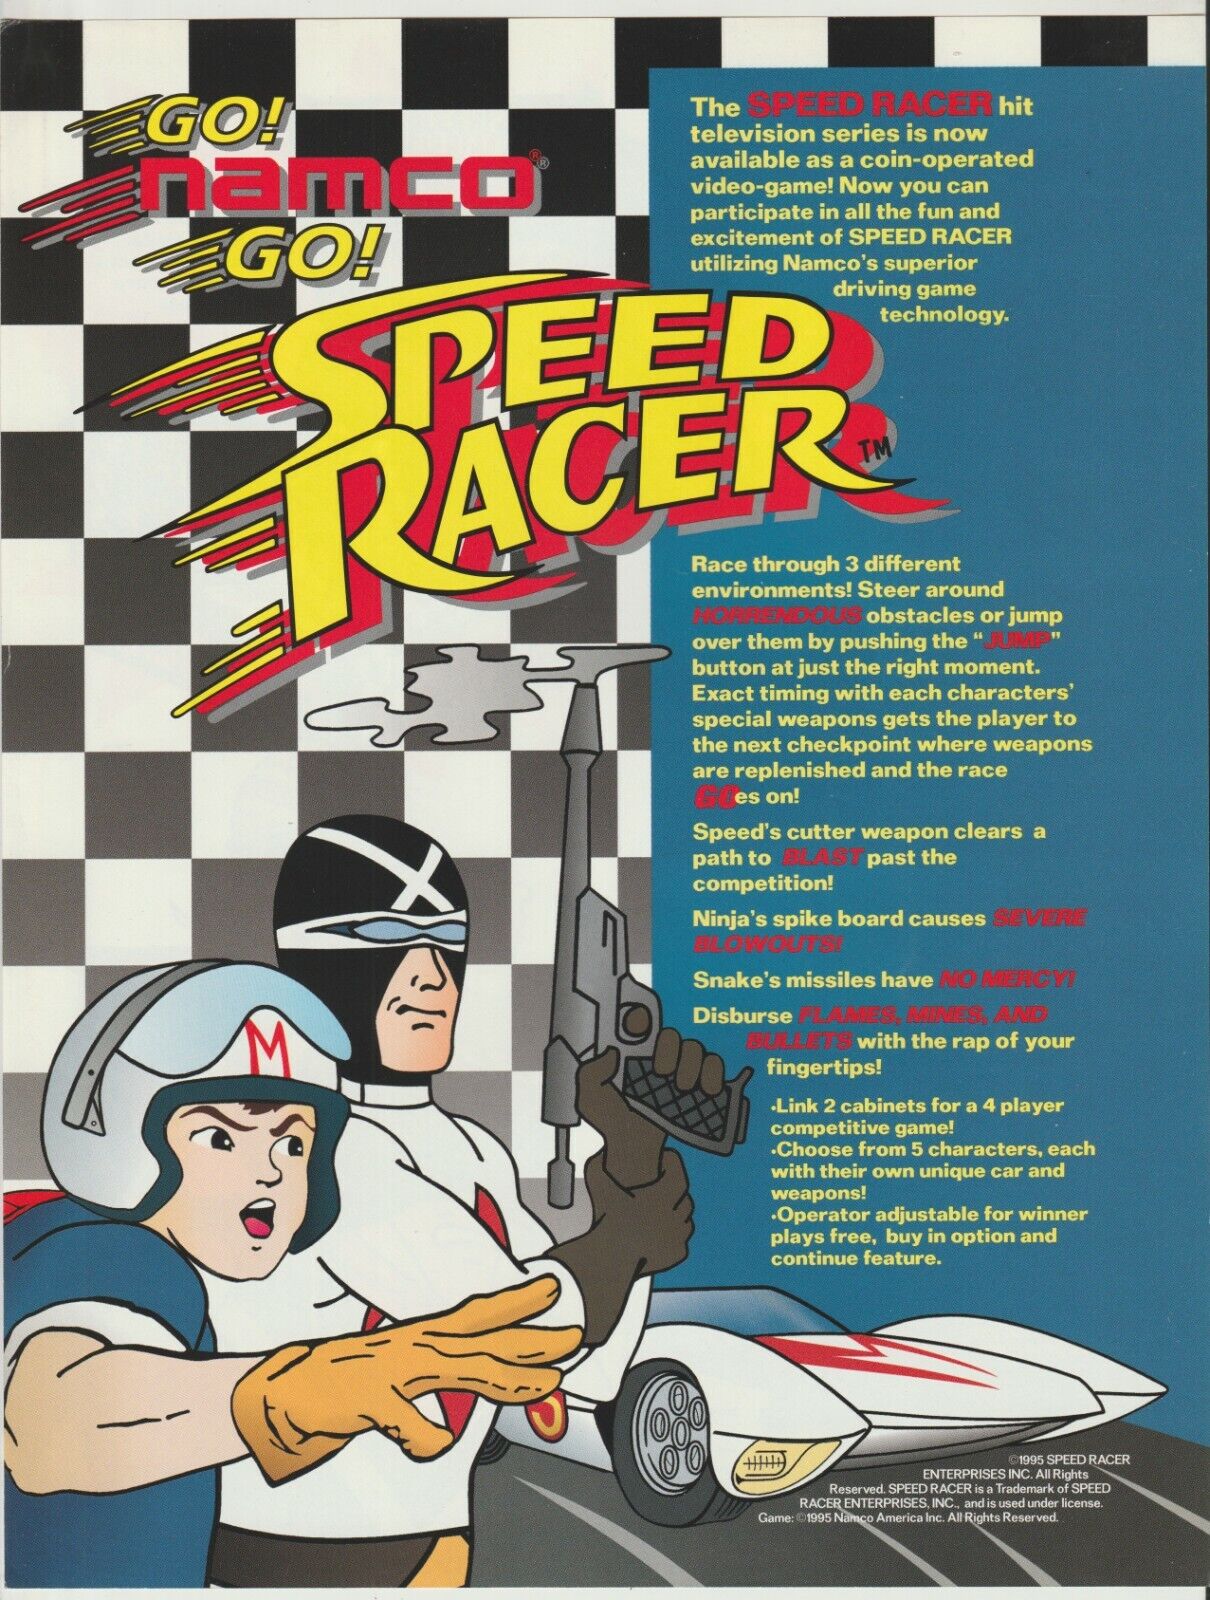 Speed Racer Arcade Game 1995 Flyer Anime Mach Five Racer X Namco